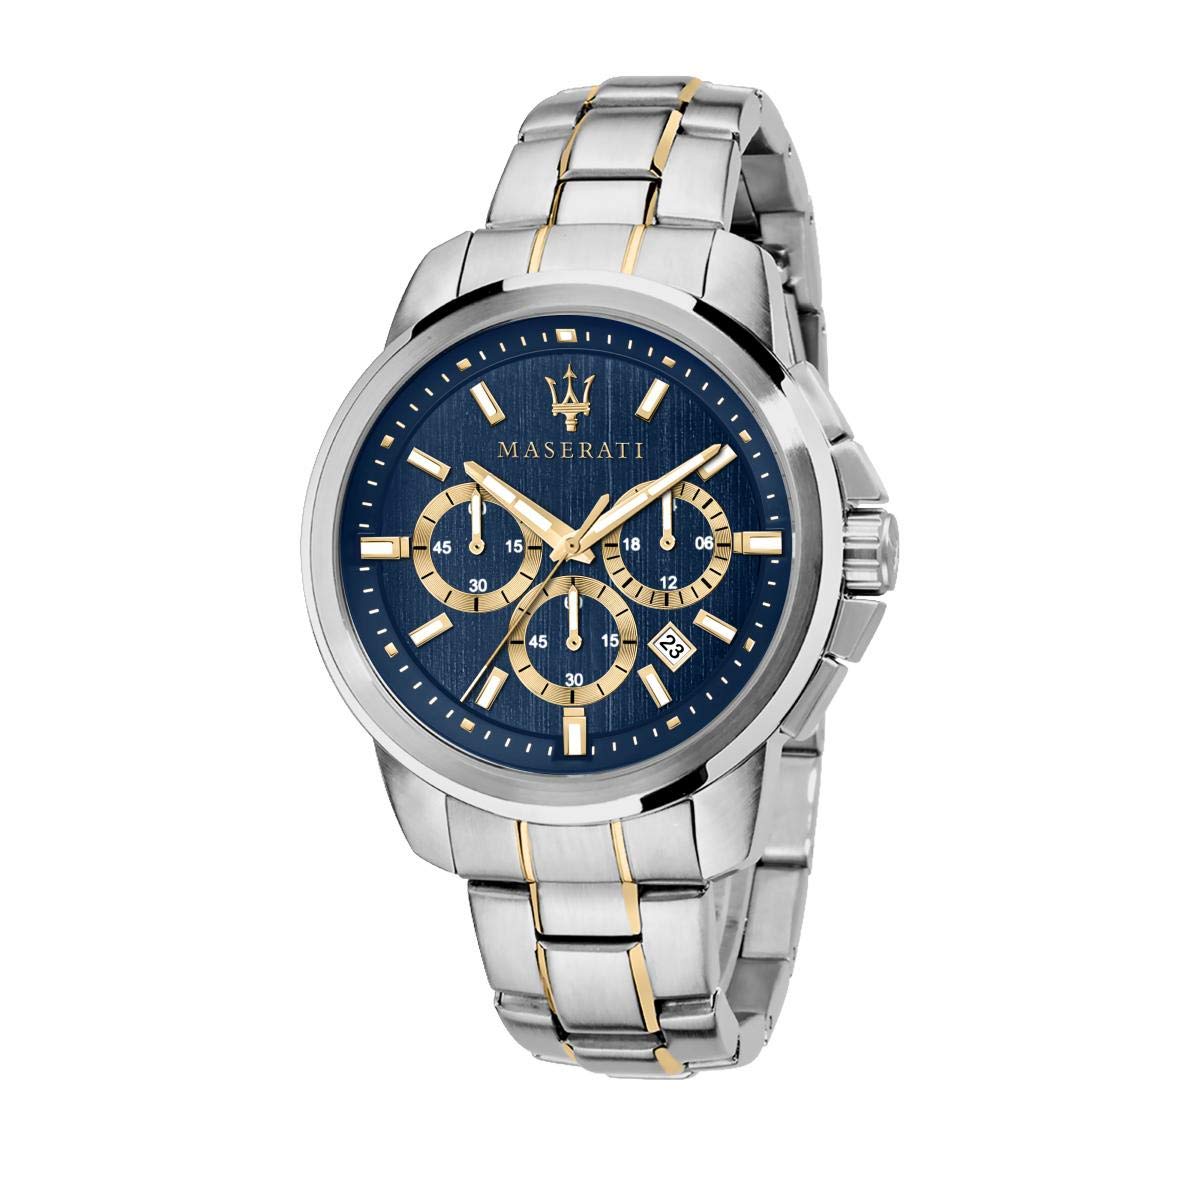 Bulgari Launches New Octo Retro Maserati Watches | Stylish watches, Maserati,  Bvlgari watches